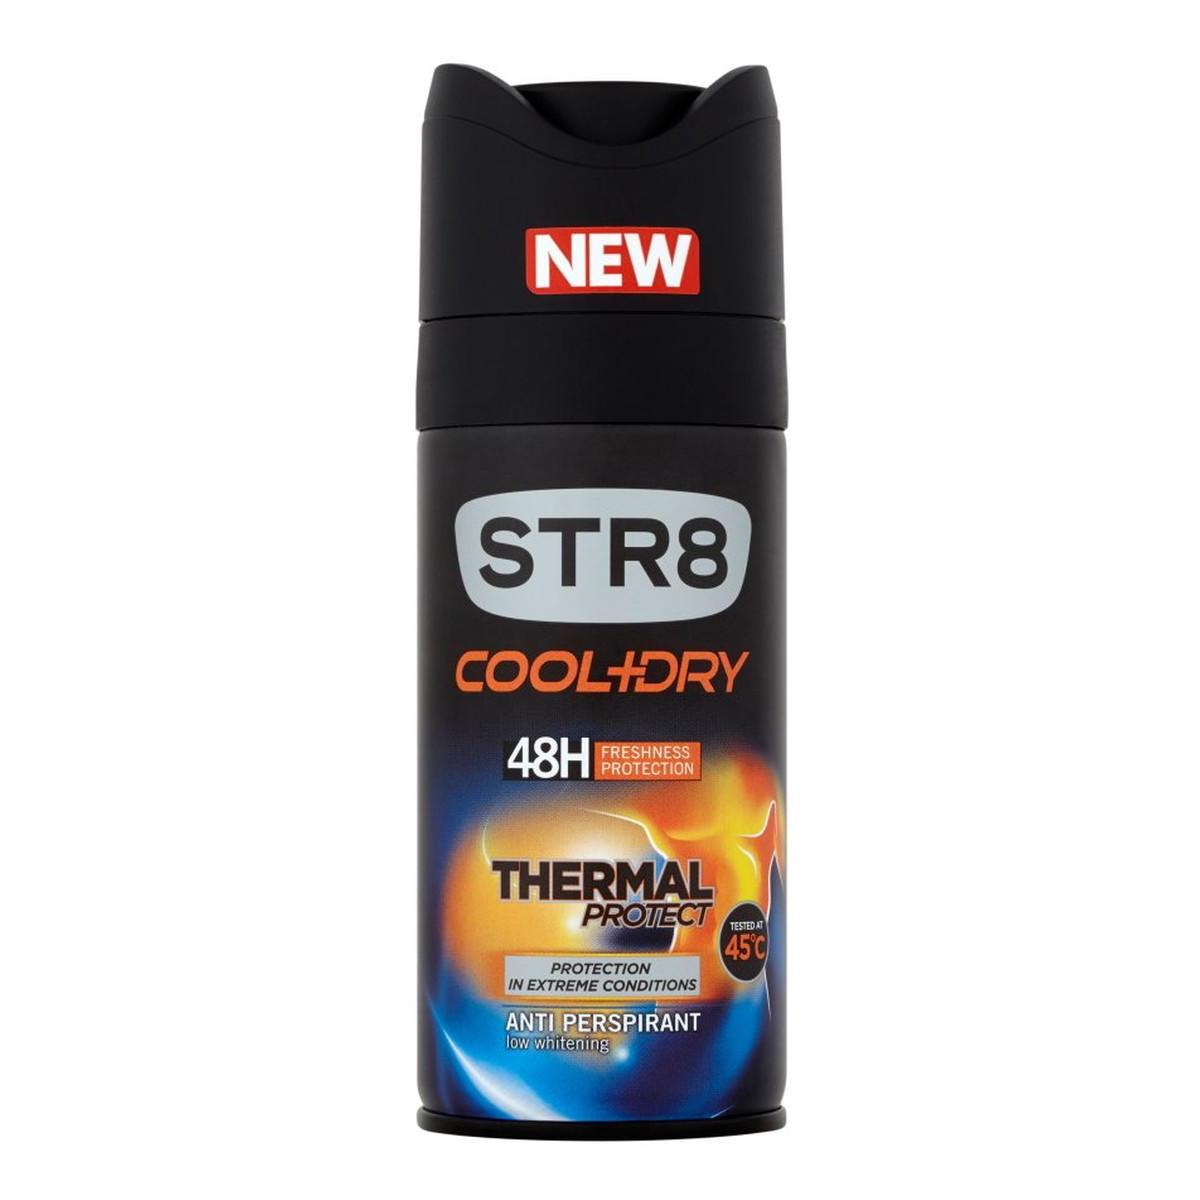 STR8 Cool+Dry THERMAL Protect DEZODORANT 150ml